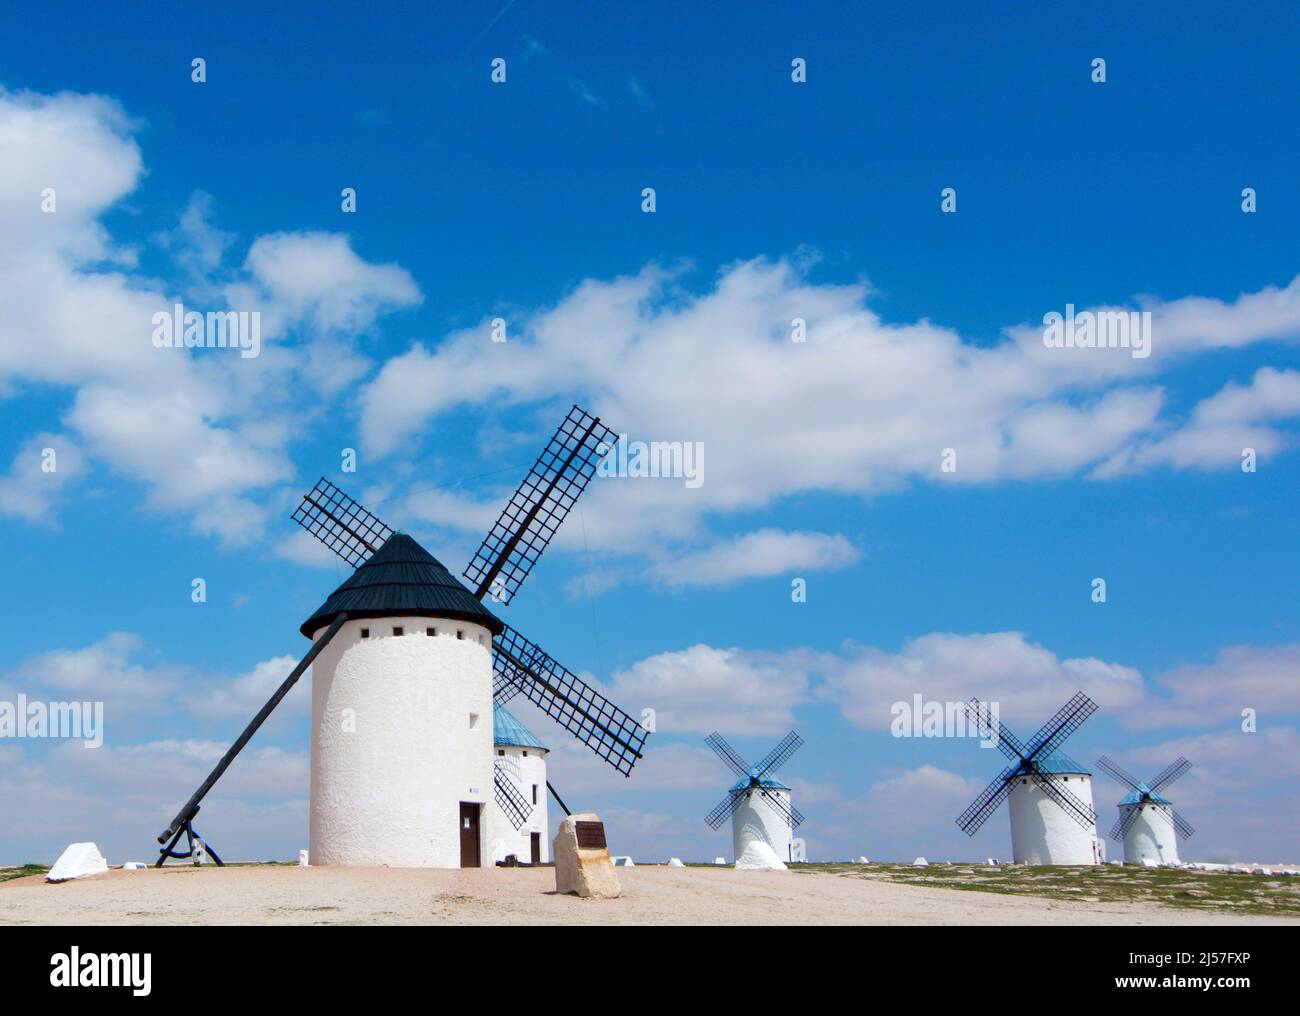 Famous Old Spanish Windmills Campo de Criptana against Blue Cloudy Sky Outdoors. Castilla La Mancha, Spain Stock Photo